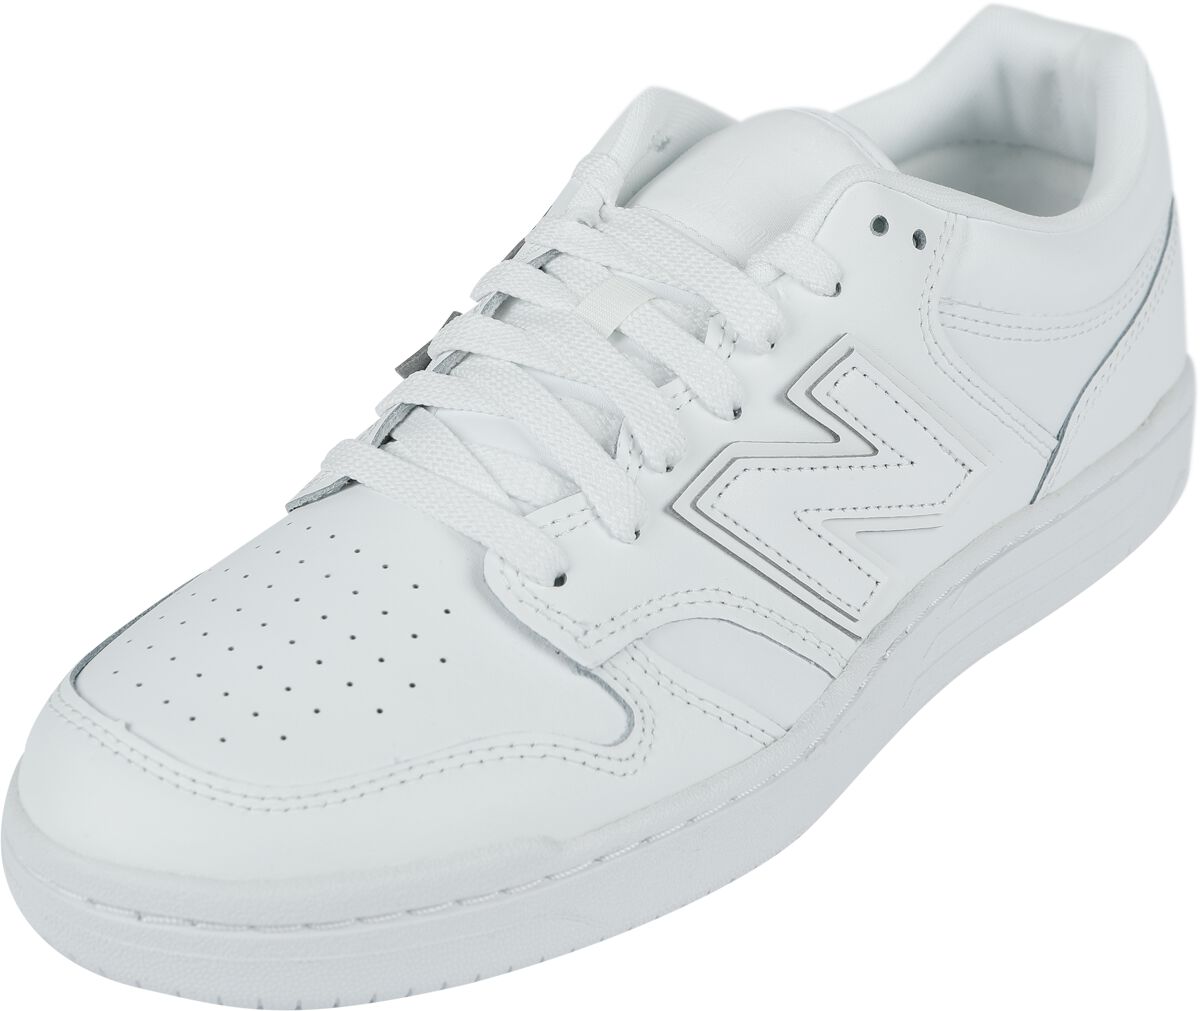 New Balance Sneaker - 480L - EU41 bis 5 - für Männer - Größe EU44 - weiß